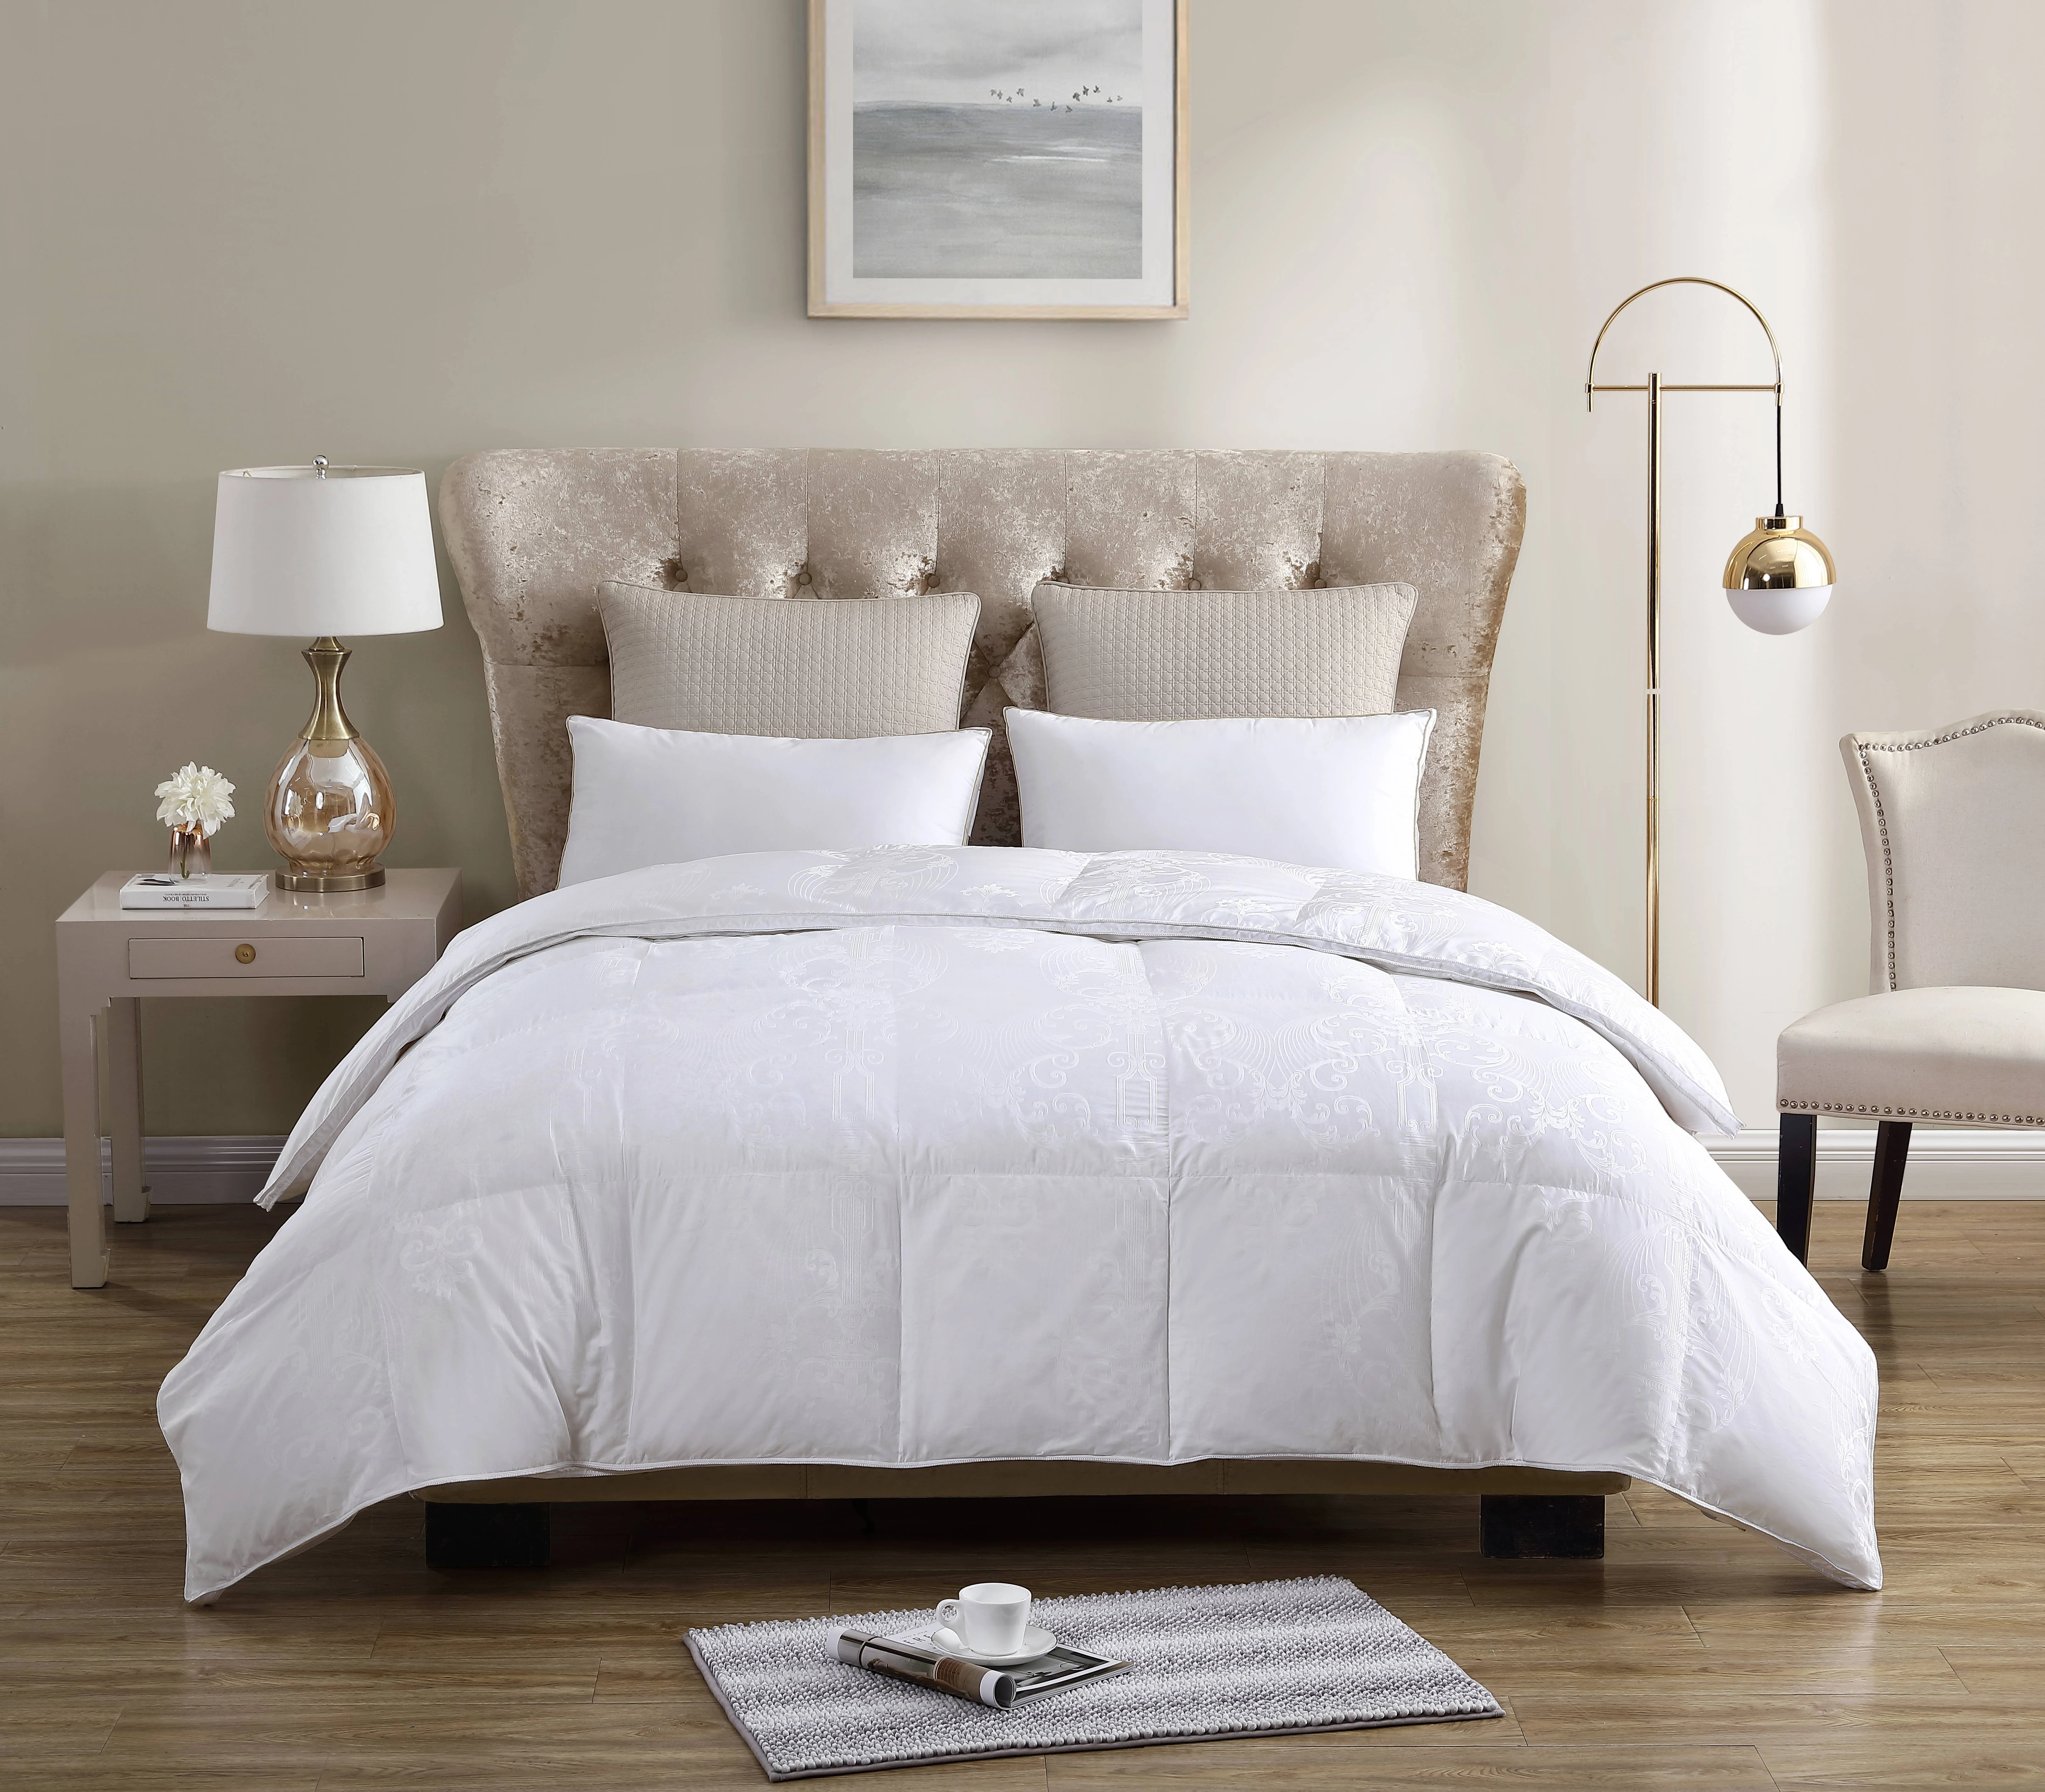 GAGA Bedding Comforter Jacquard Duvet 10% Duck Down Filling Hotel Home Usage Simple Modern Quilted Pattern Quilt Soft Warmt